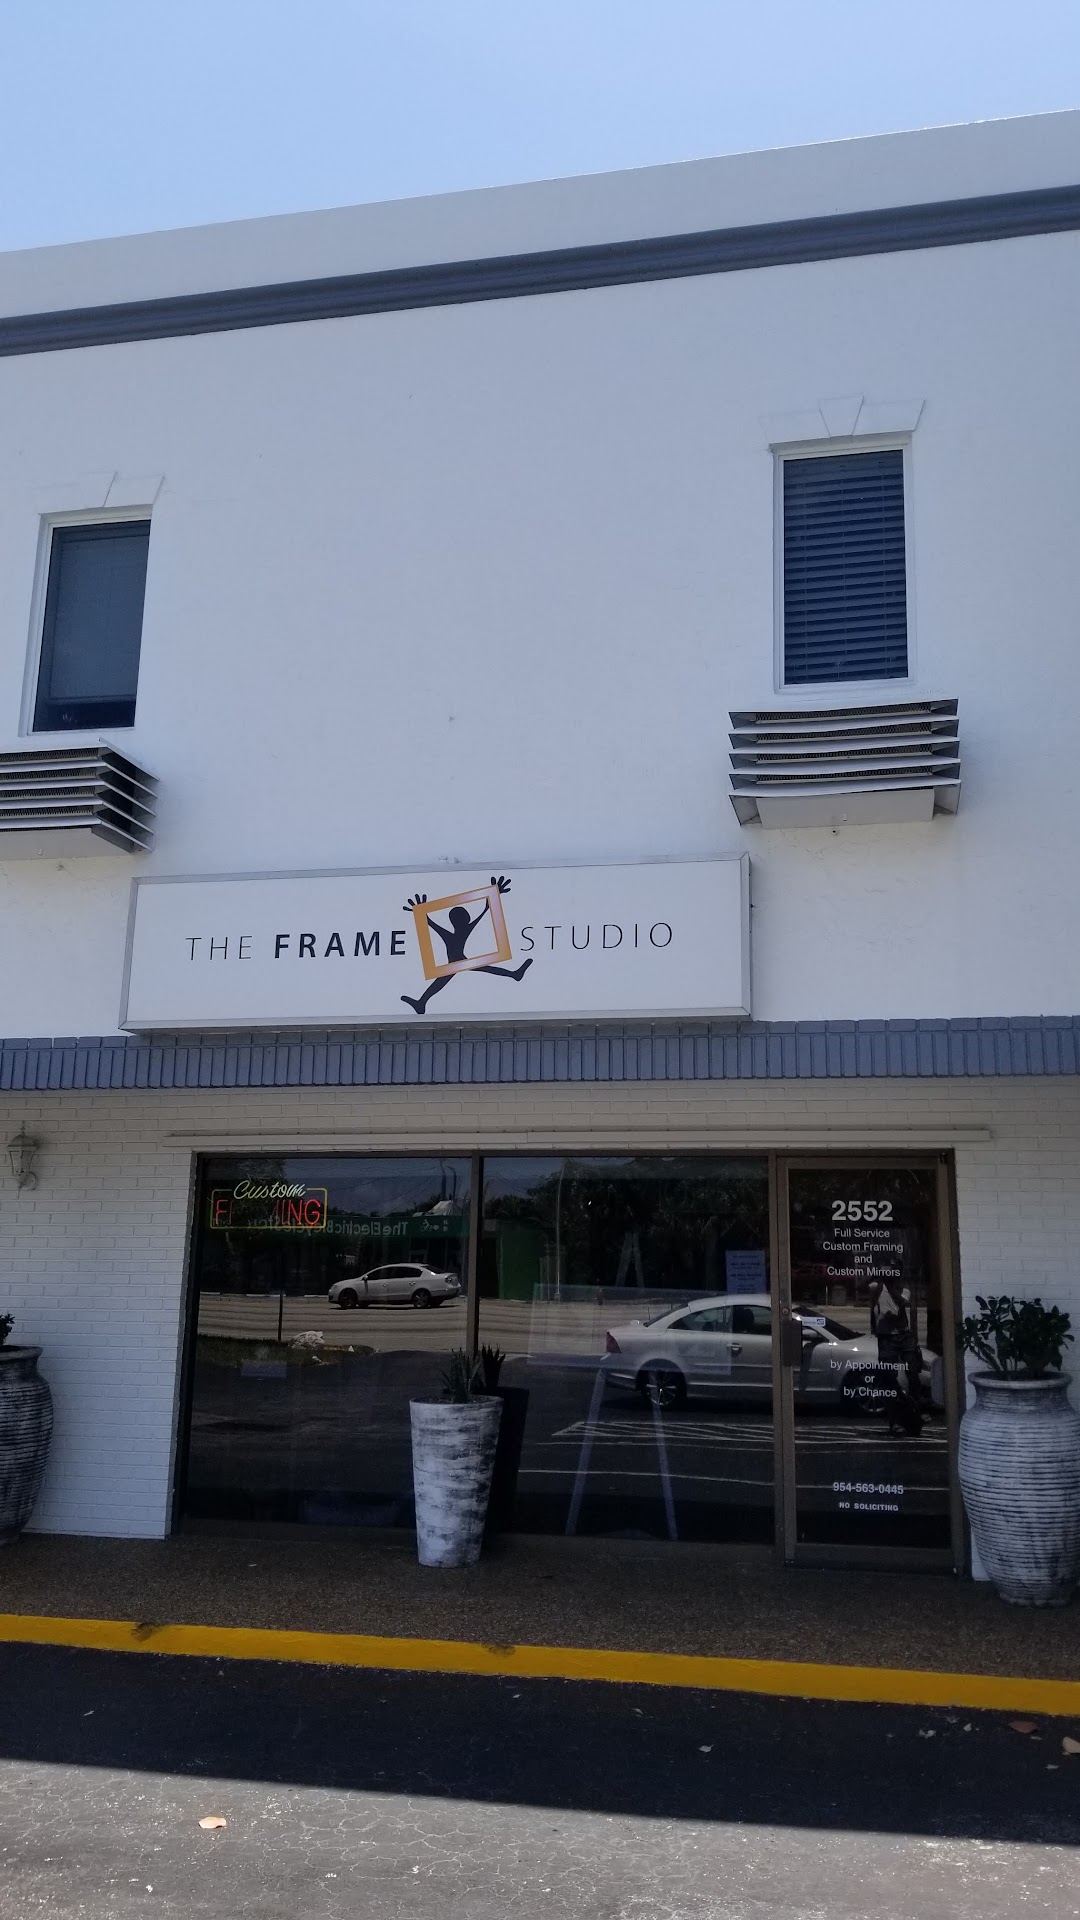 The Frame Studio